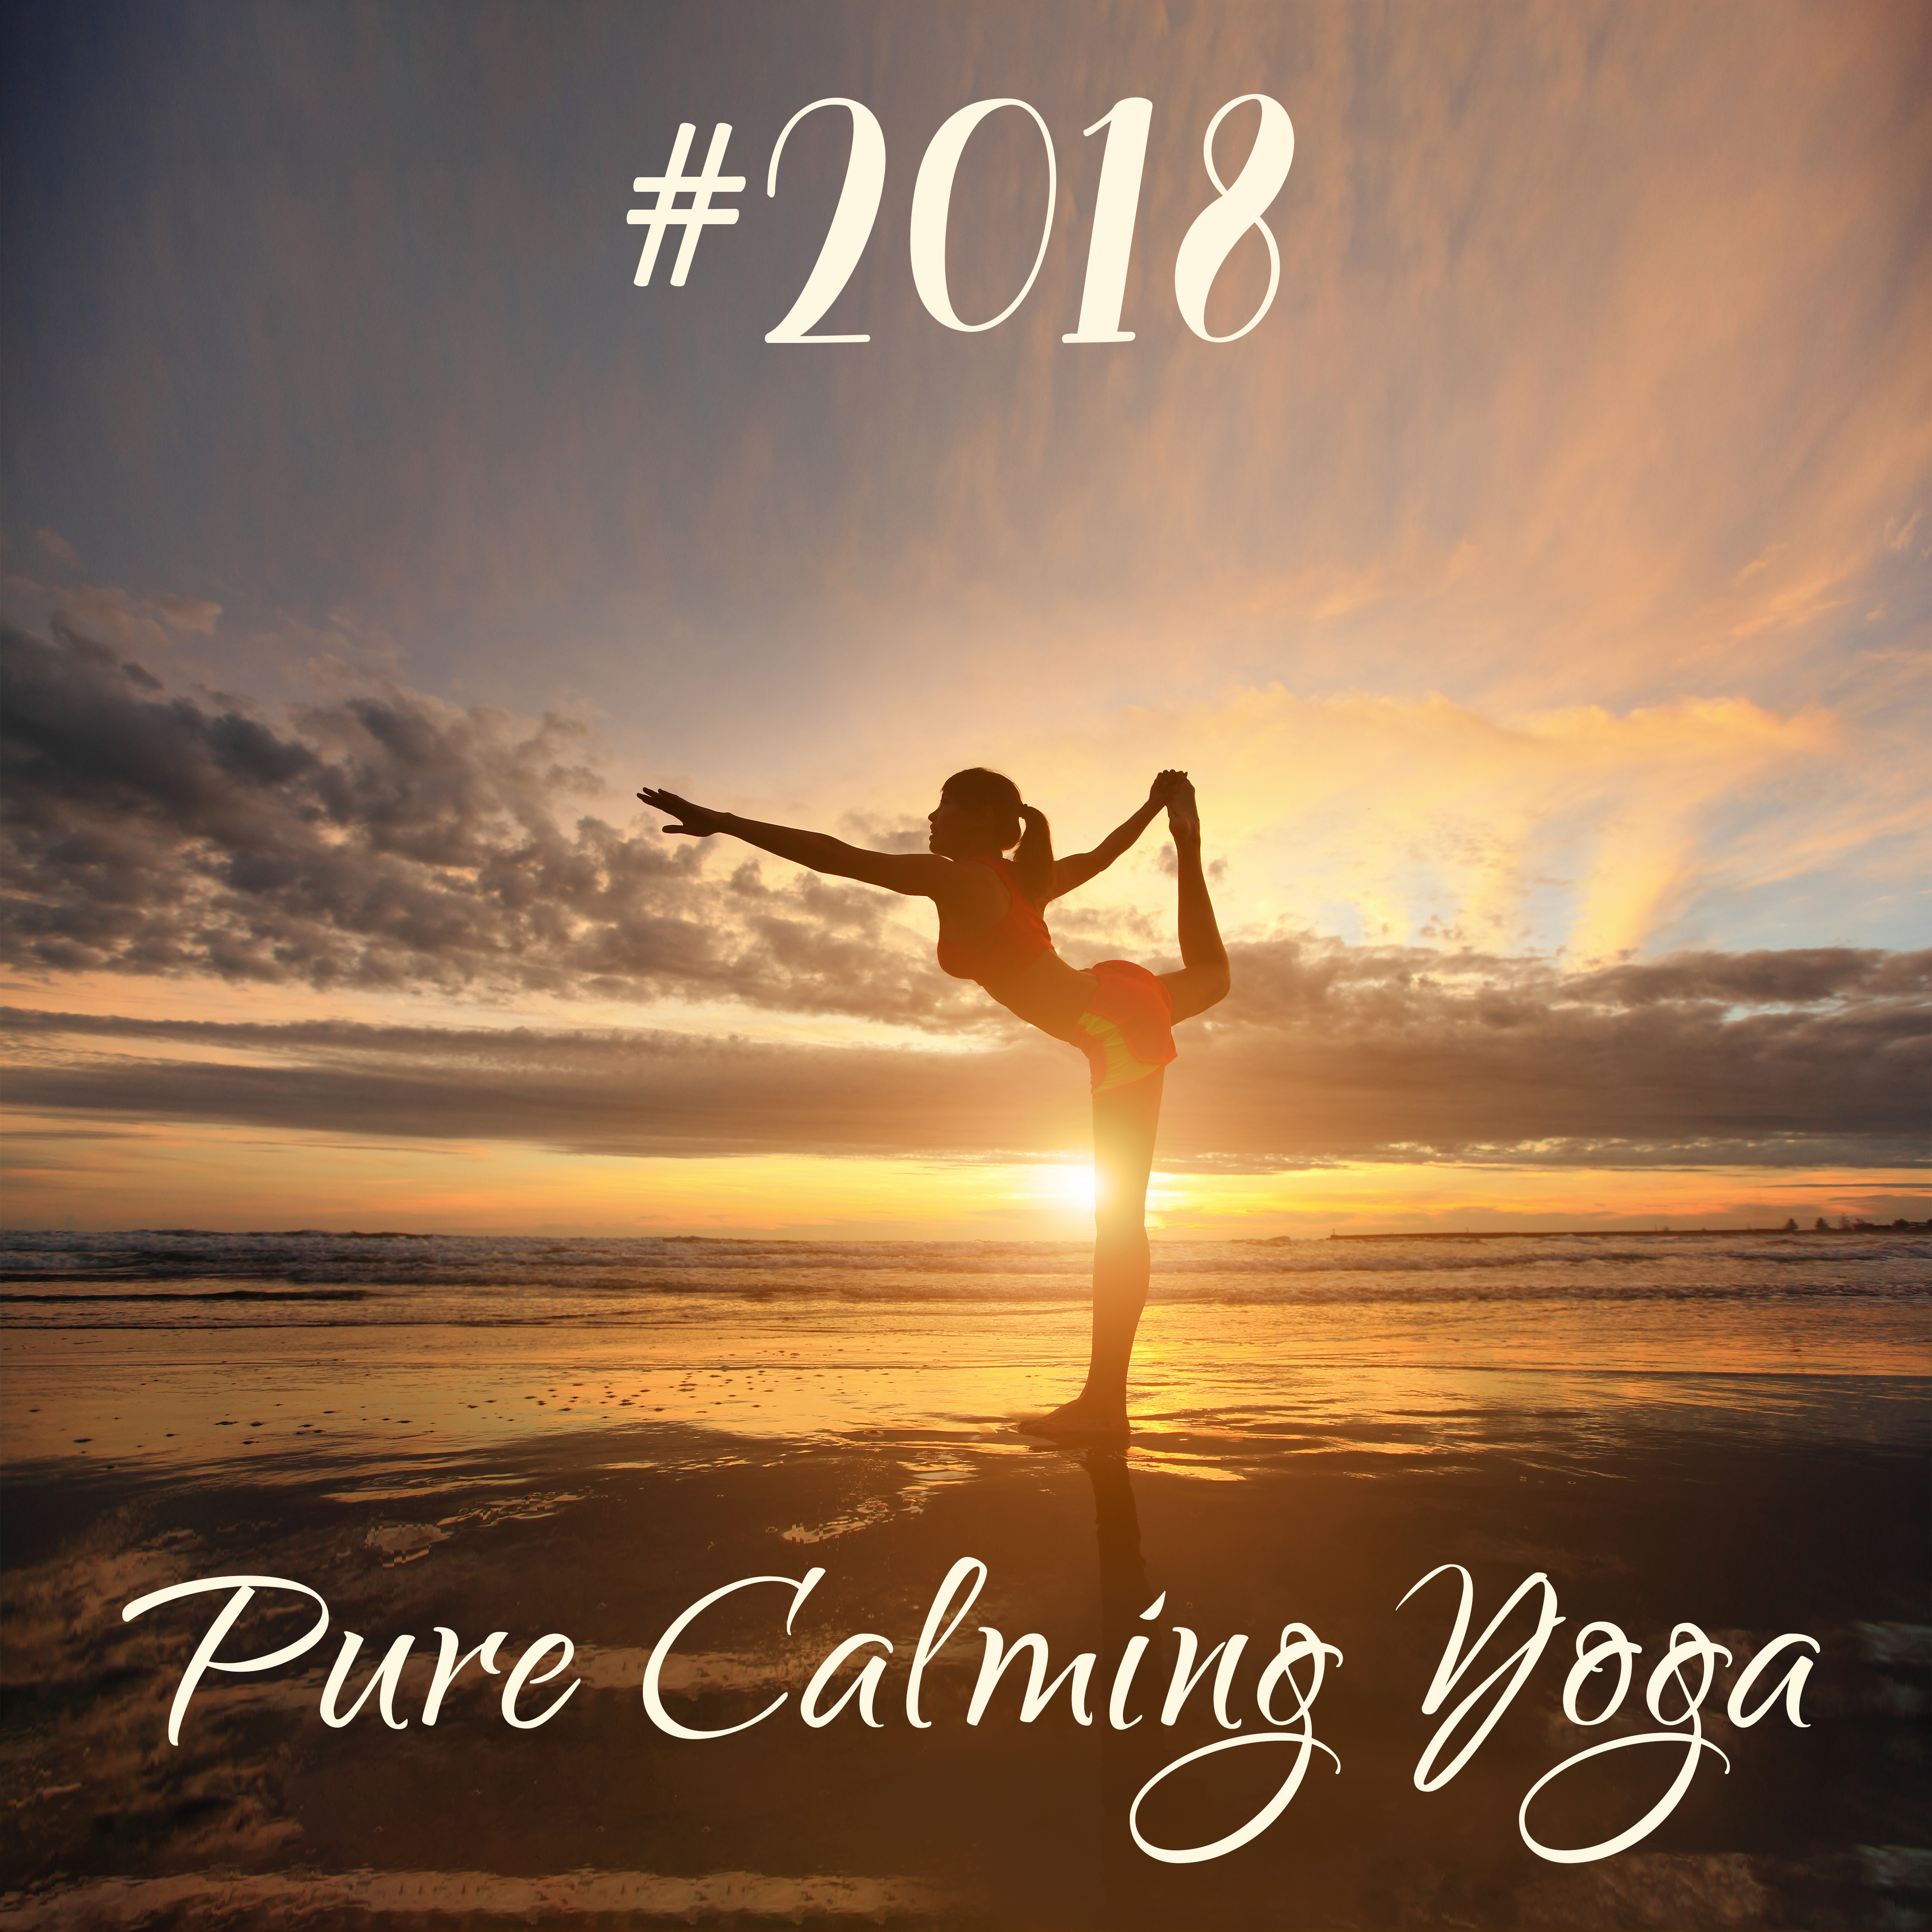 #2018 Pure Calming Yoga